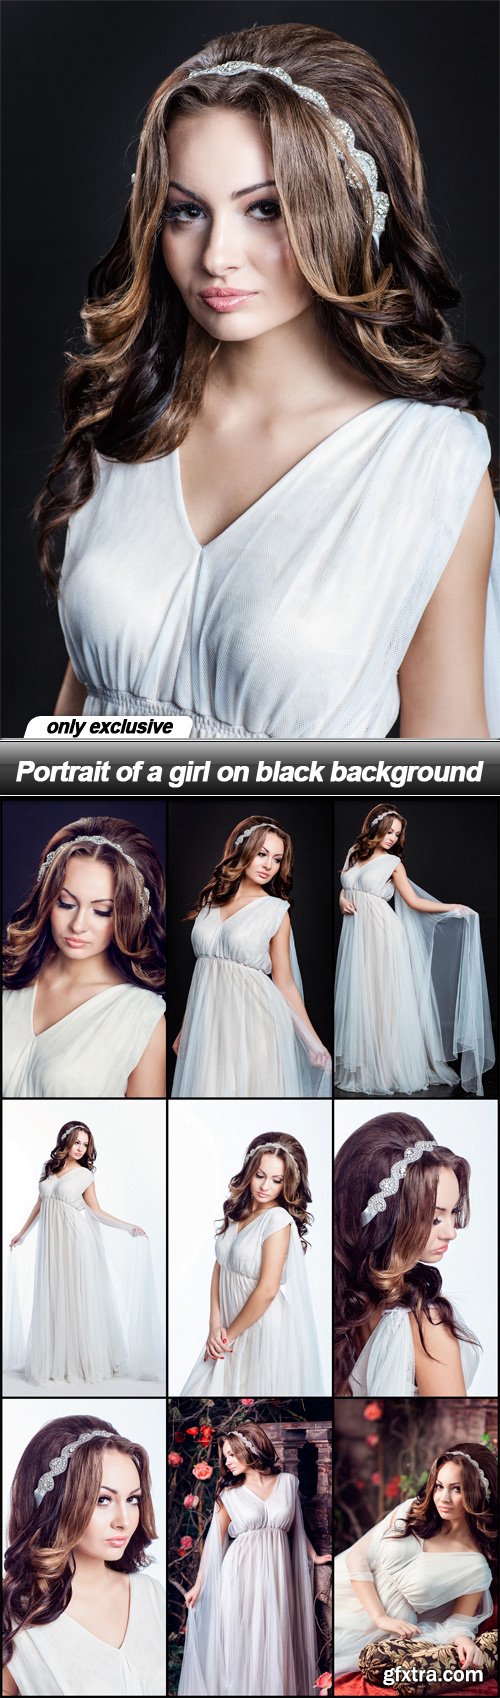 Portrait of a girl on black background - 10 UHQ JPEG